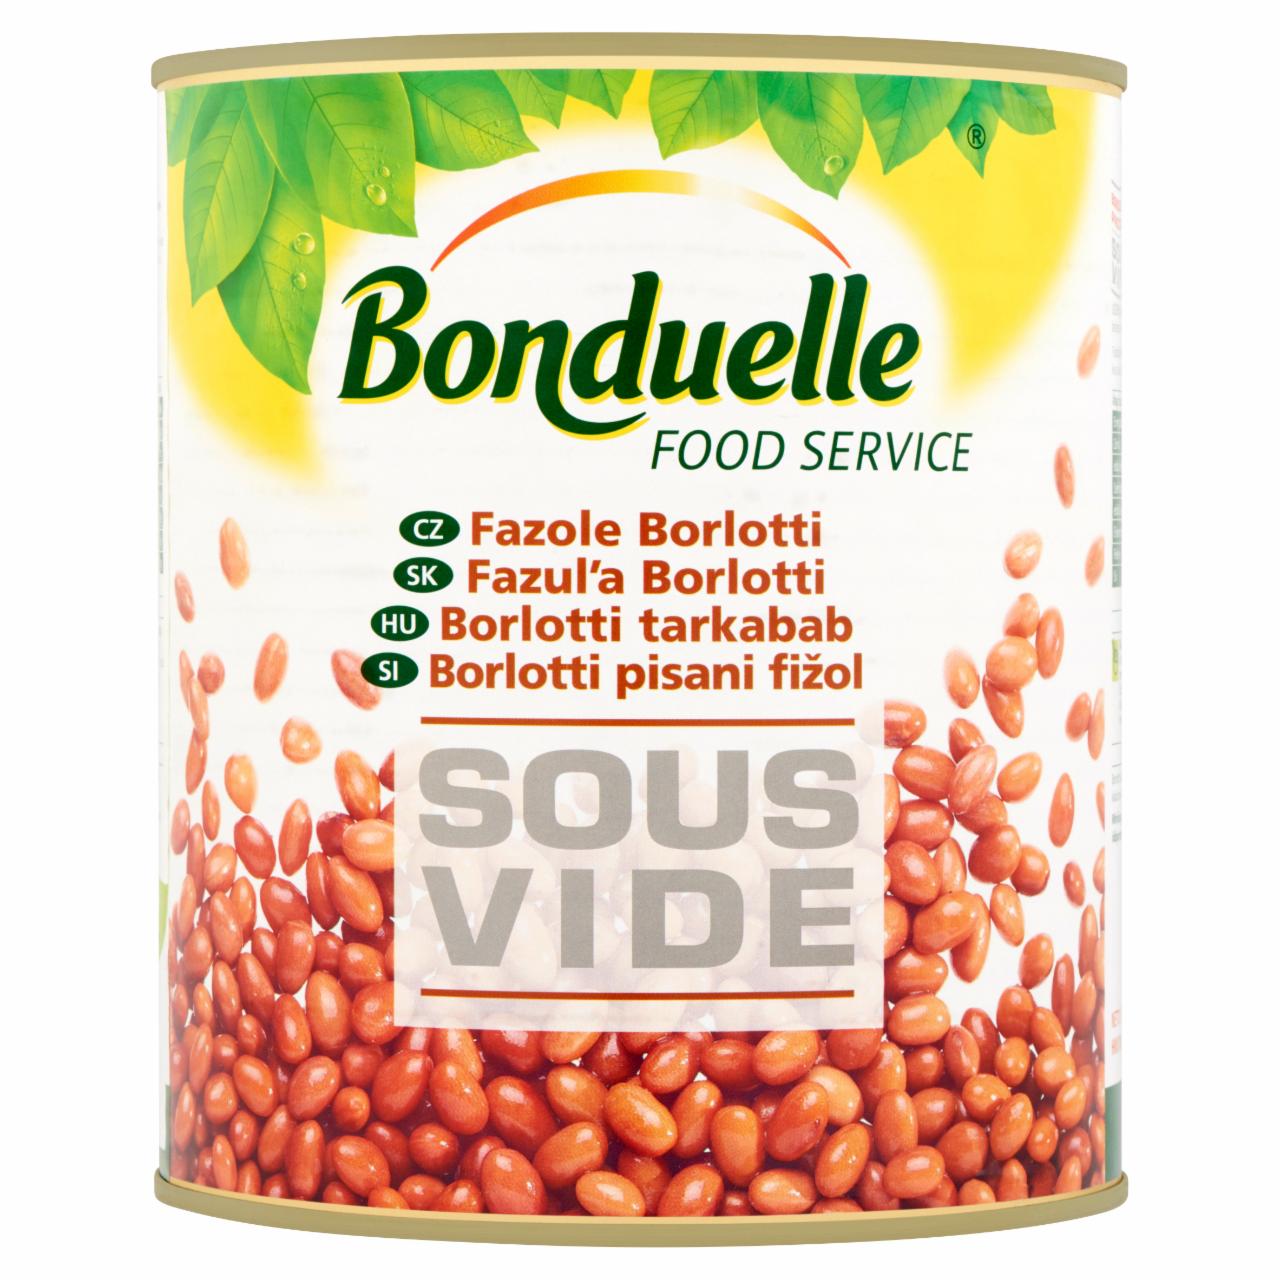 Képek - Bonduelle Food Service Sous Vide borlotti tarkabab 2650 g